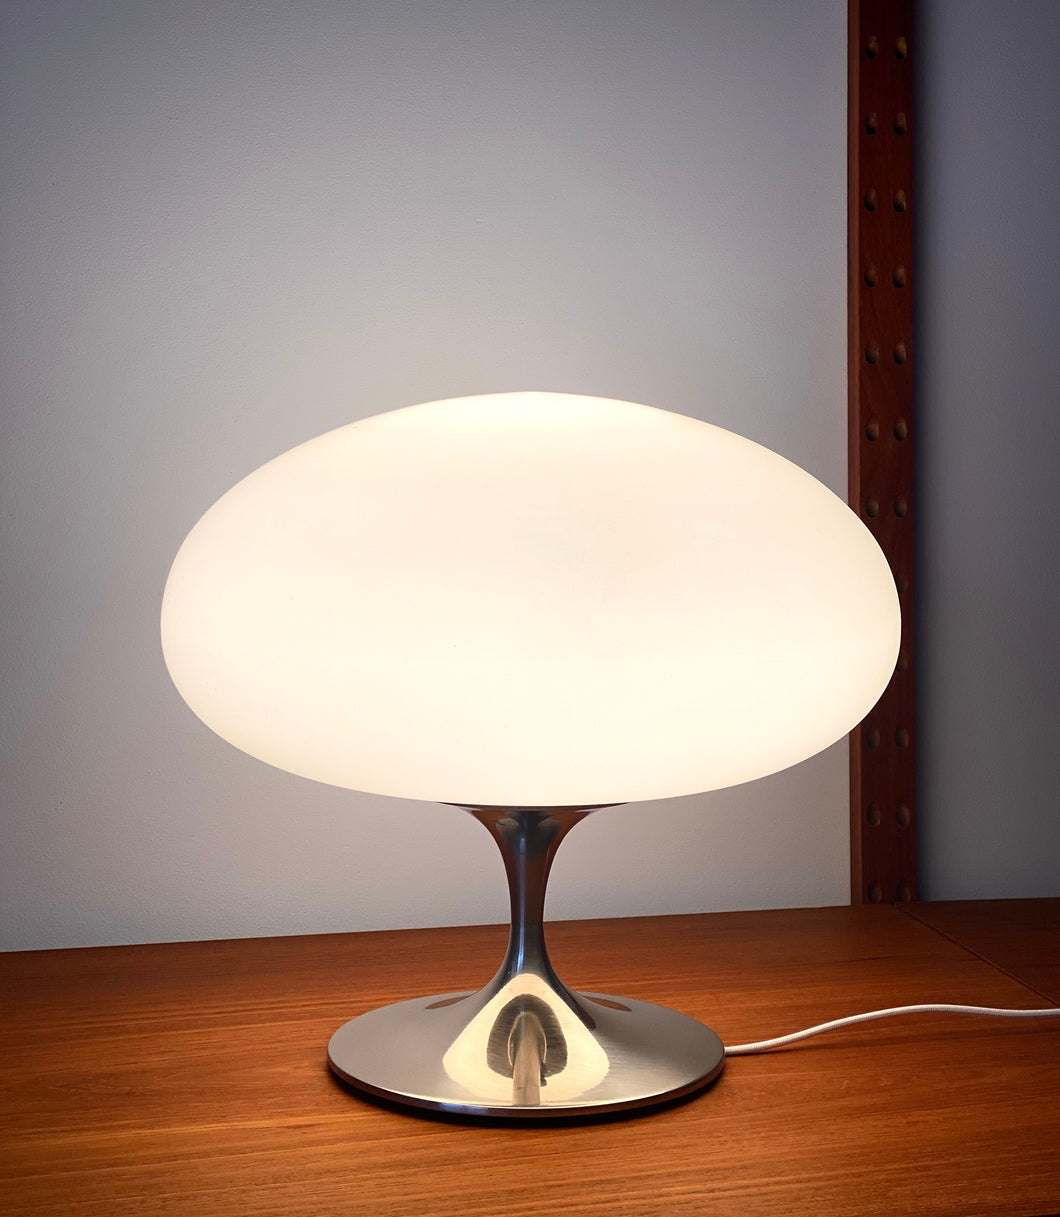 Mushroom table lamp by Laurel Lamp Company